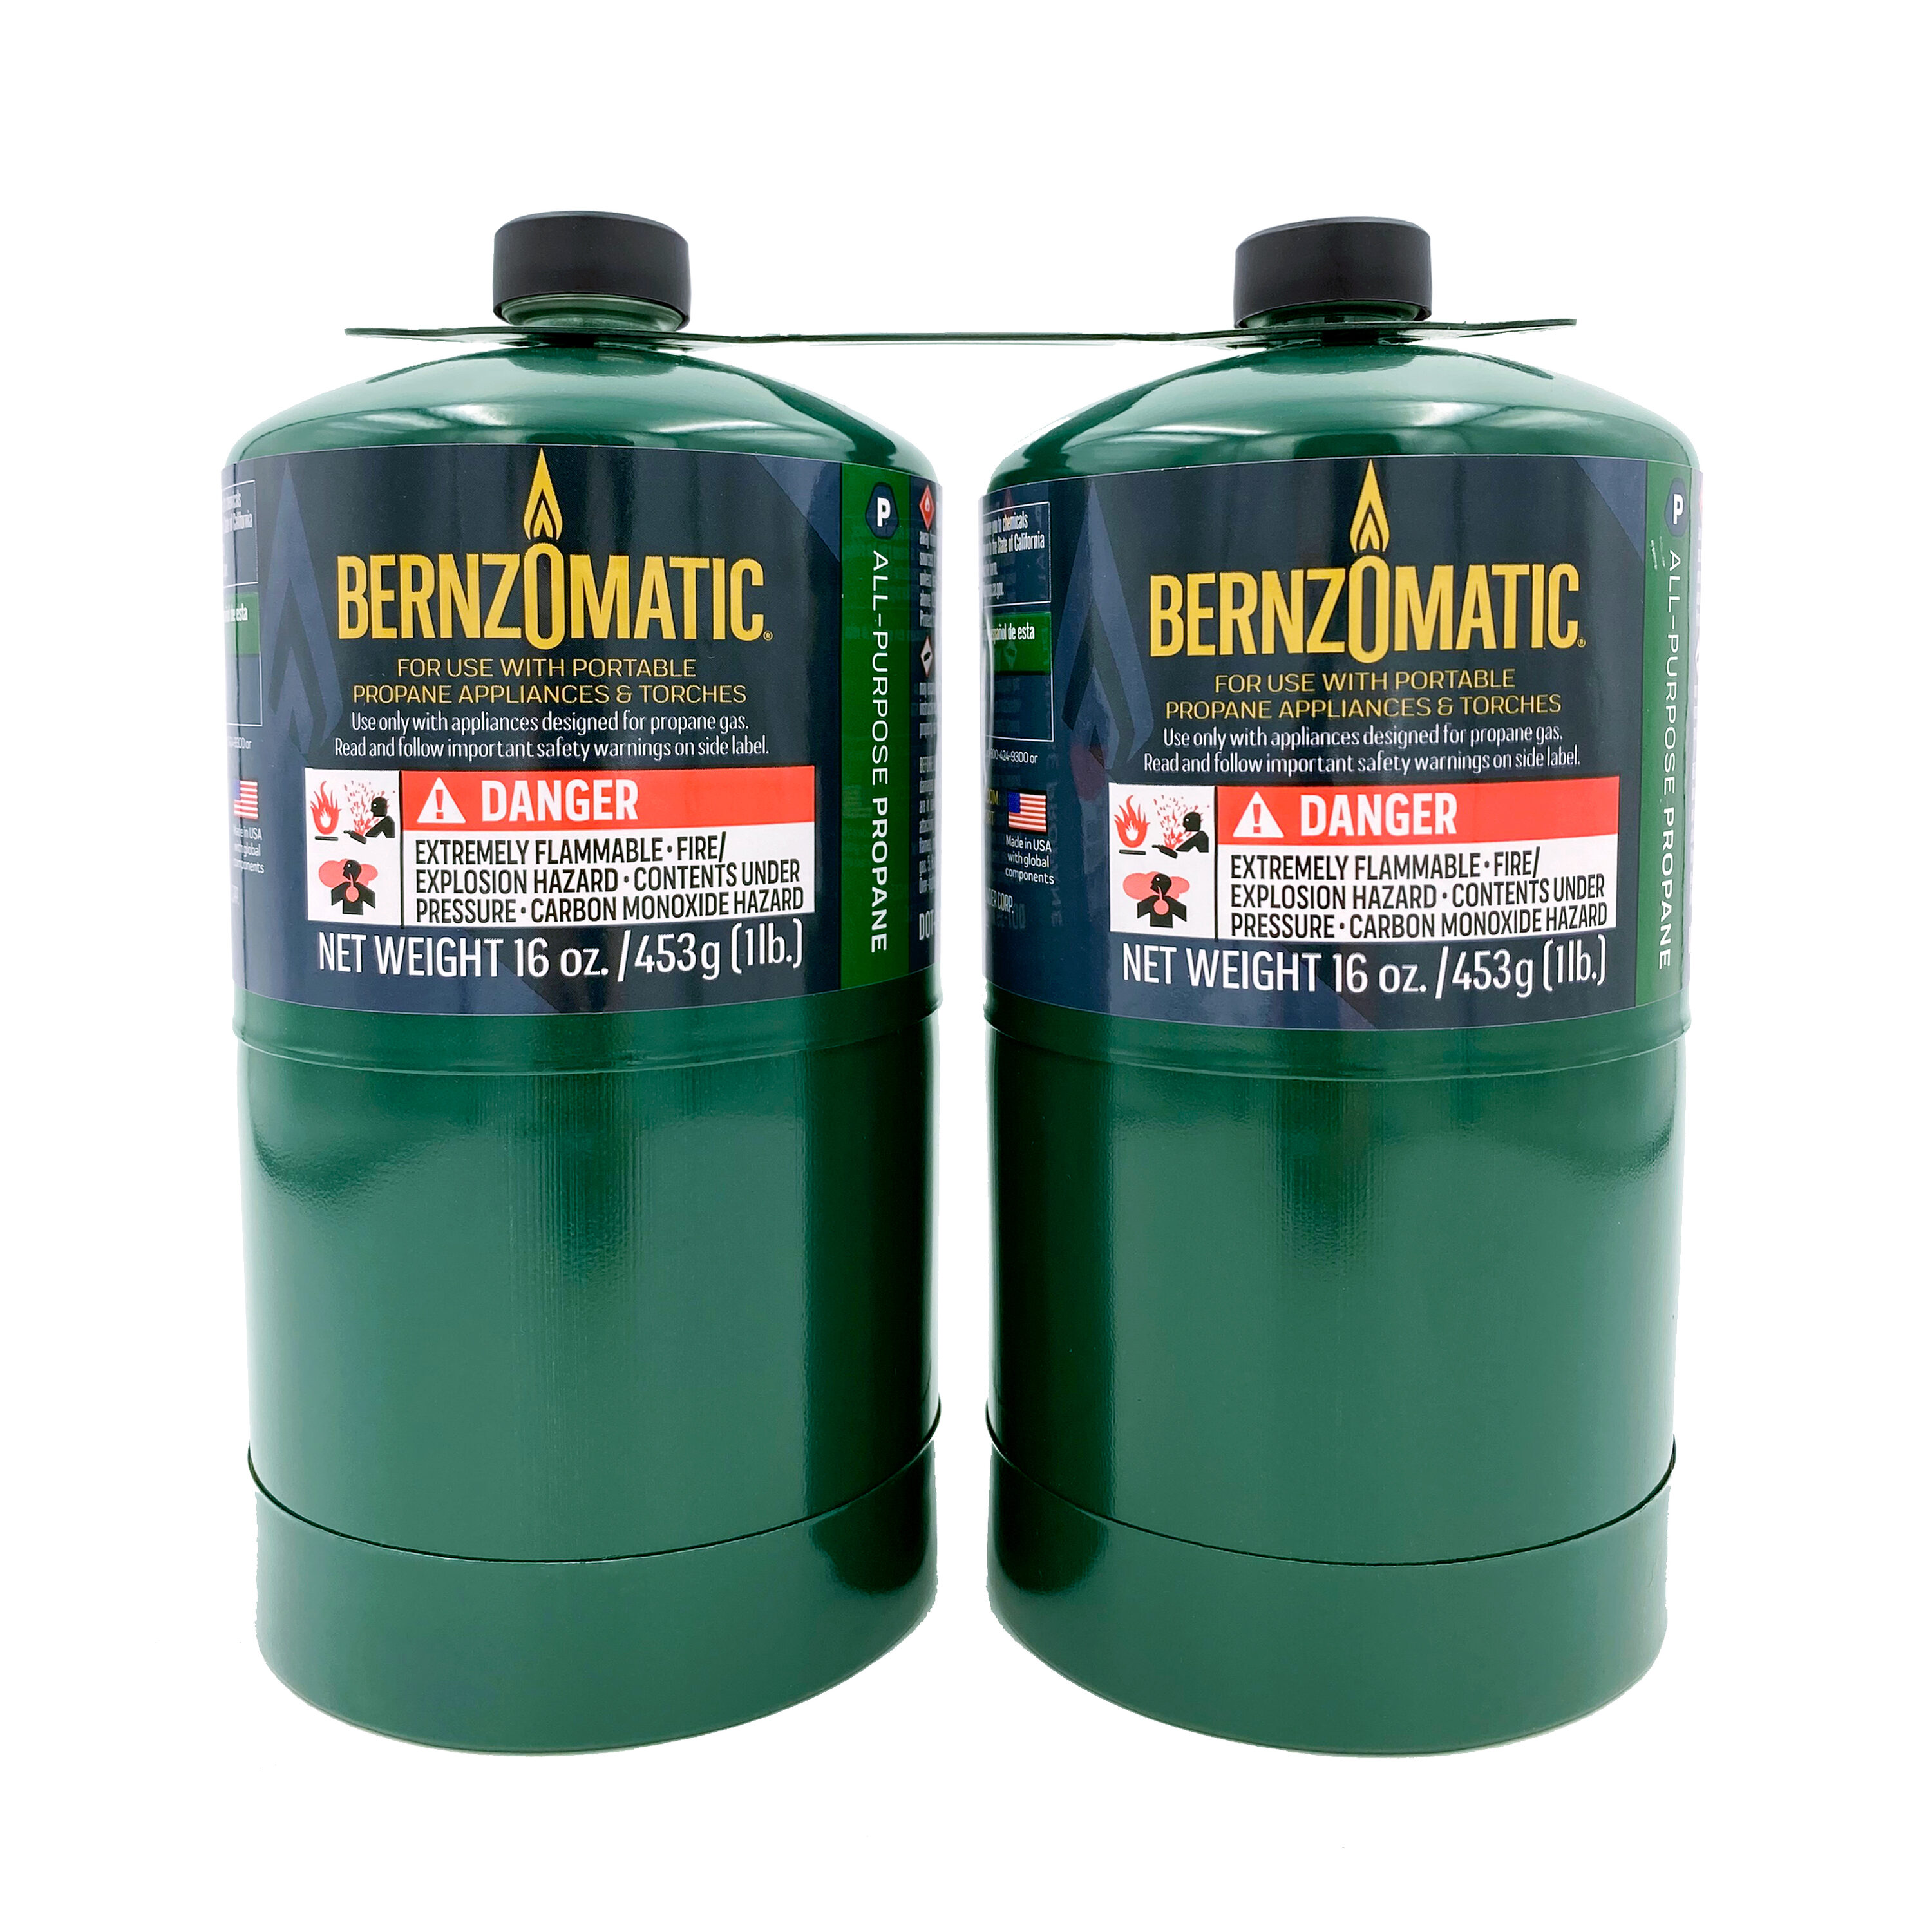 Bernzomatic 2-Pack Green Steel Propane Tanks 8x8x4 Inches Pre